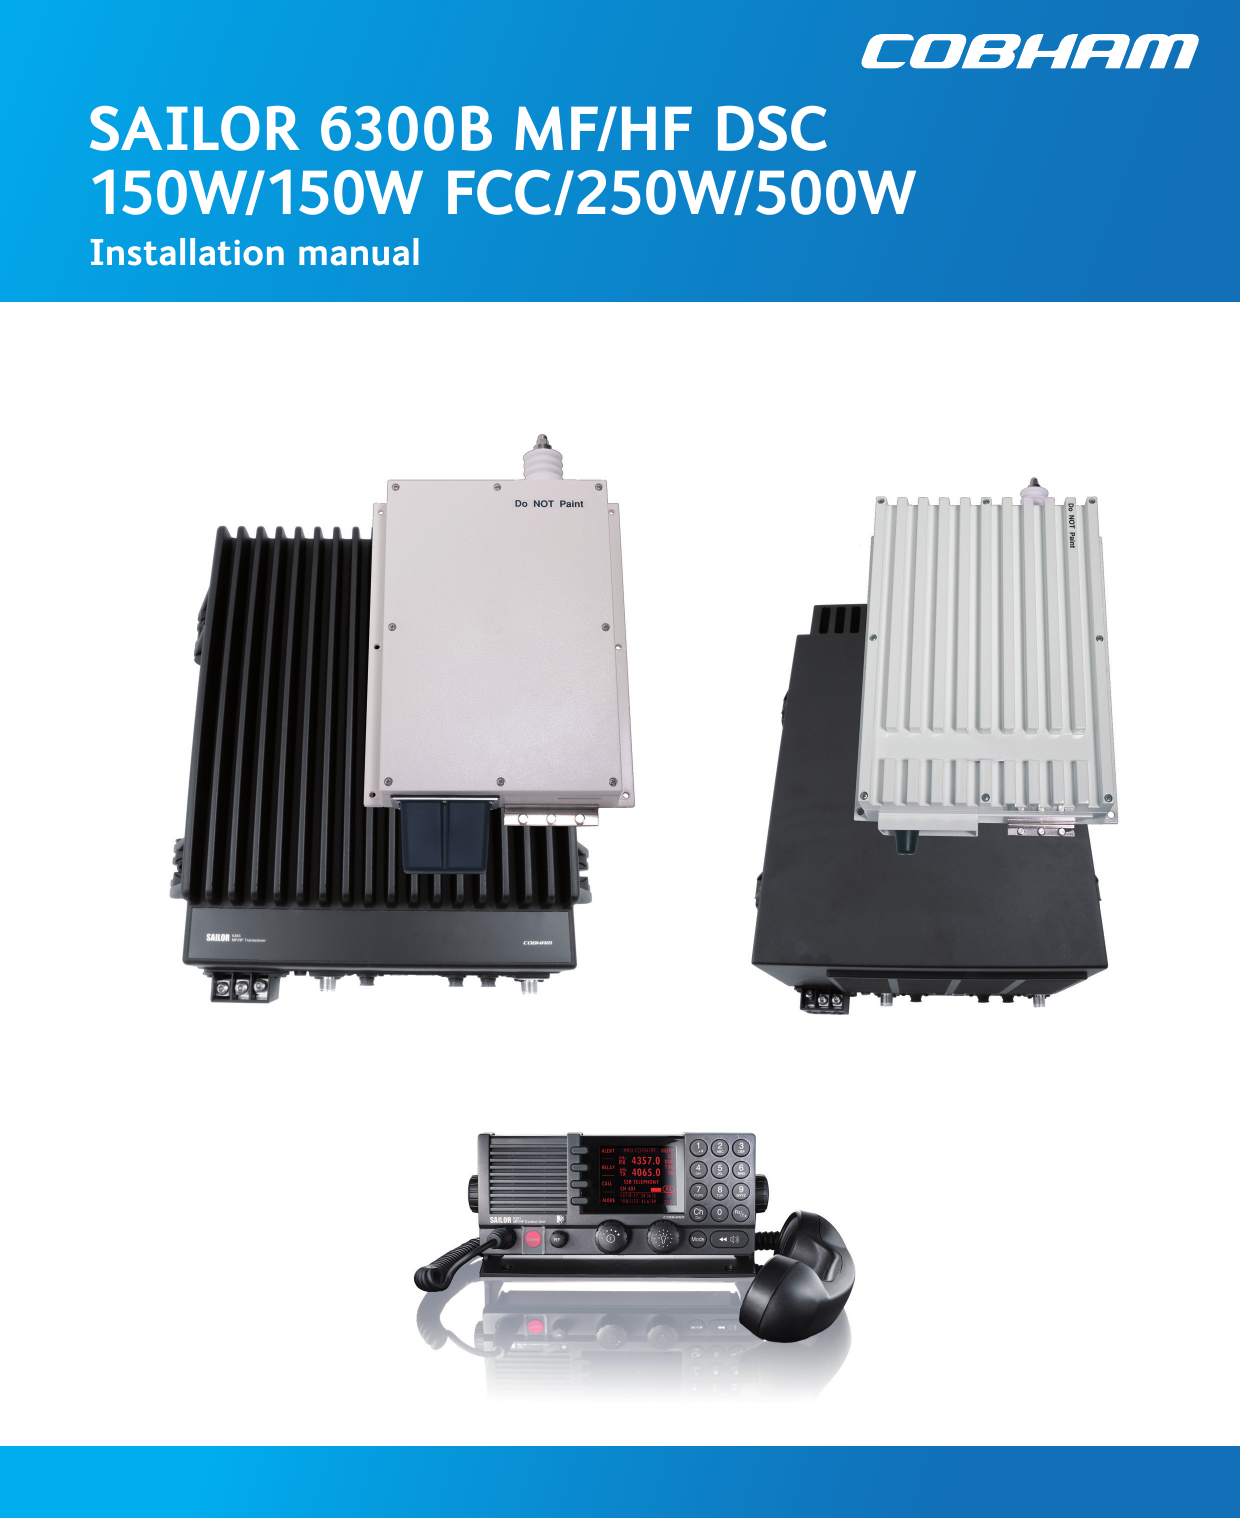 SAILOR 6300B MF/HF DSCInstallation manual150W/150W FCC/250W/500W